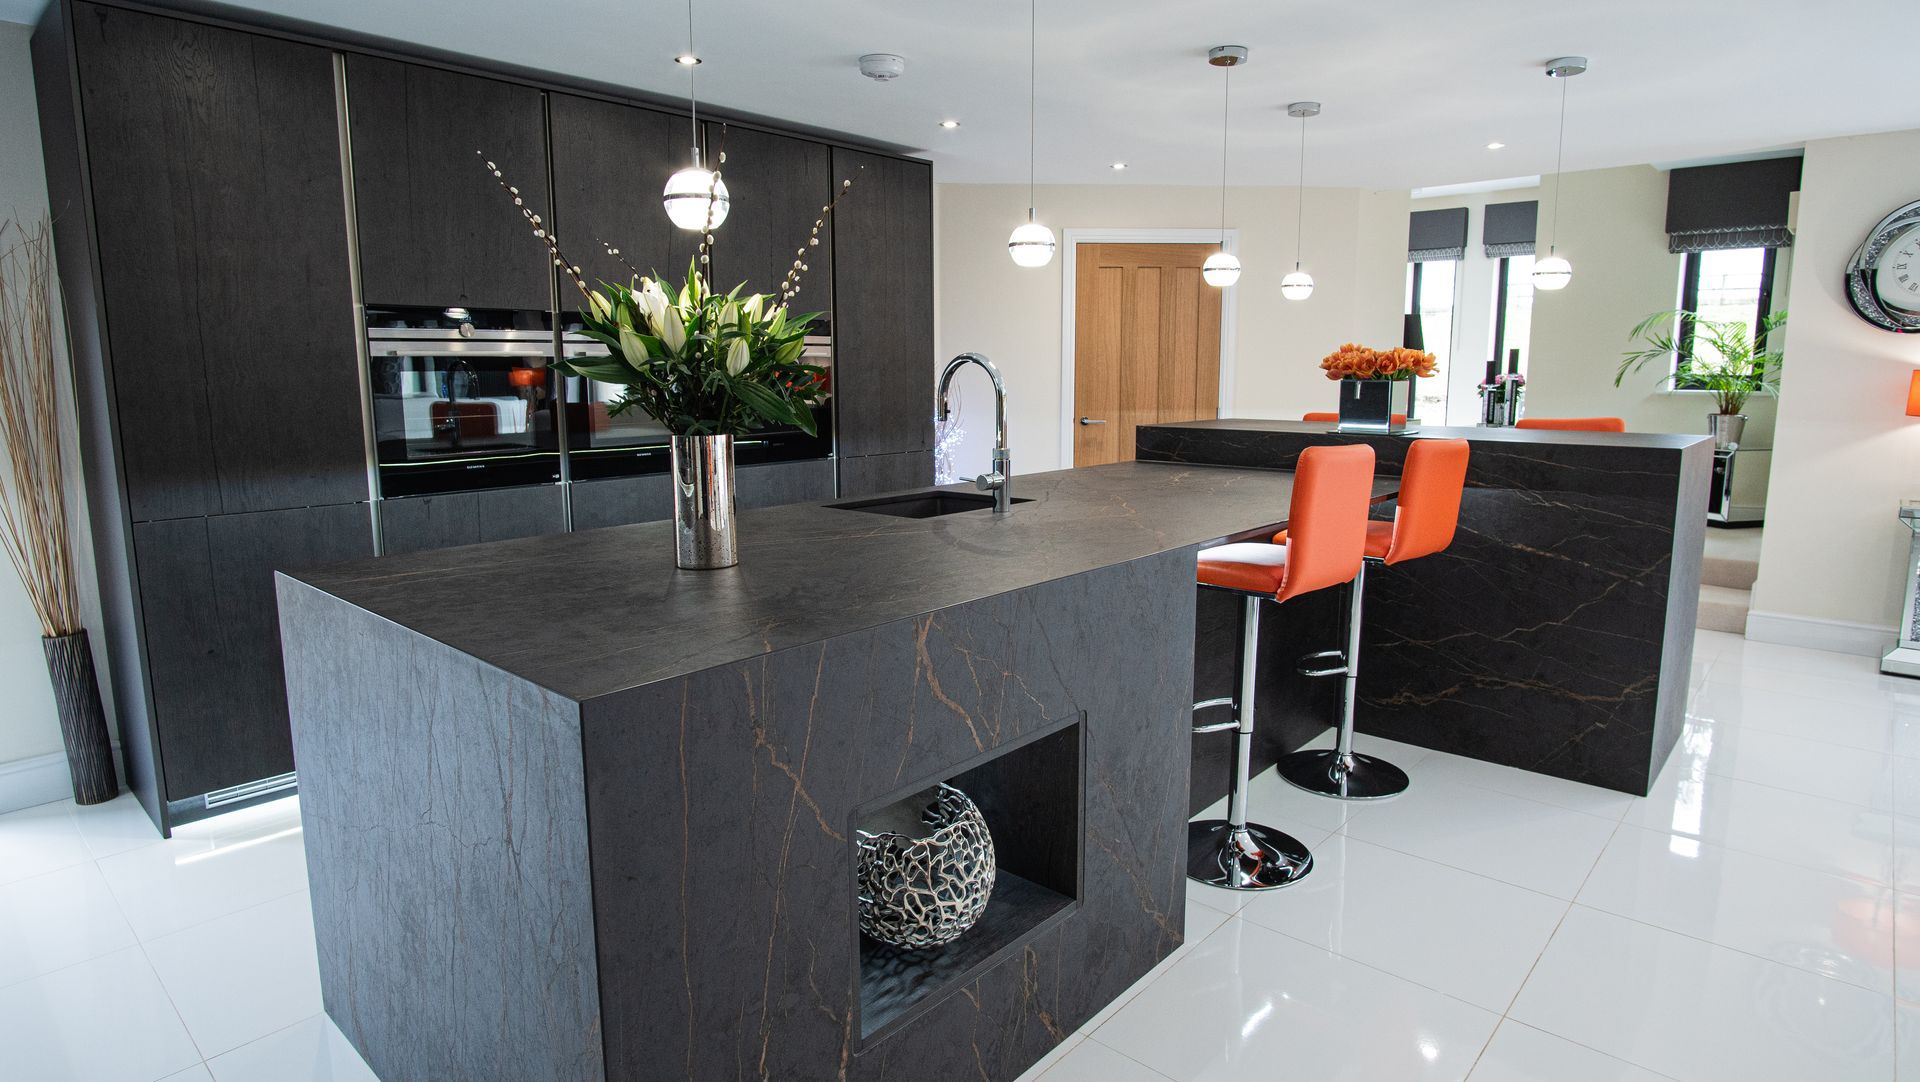 Stuart contemporary-style shaker kitchen by exact in Caversham